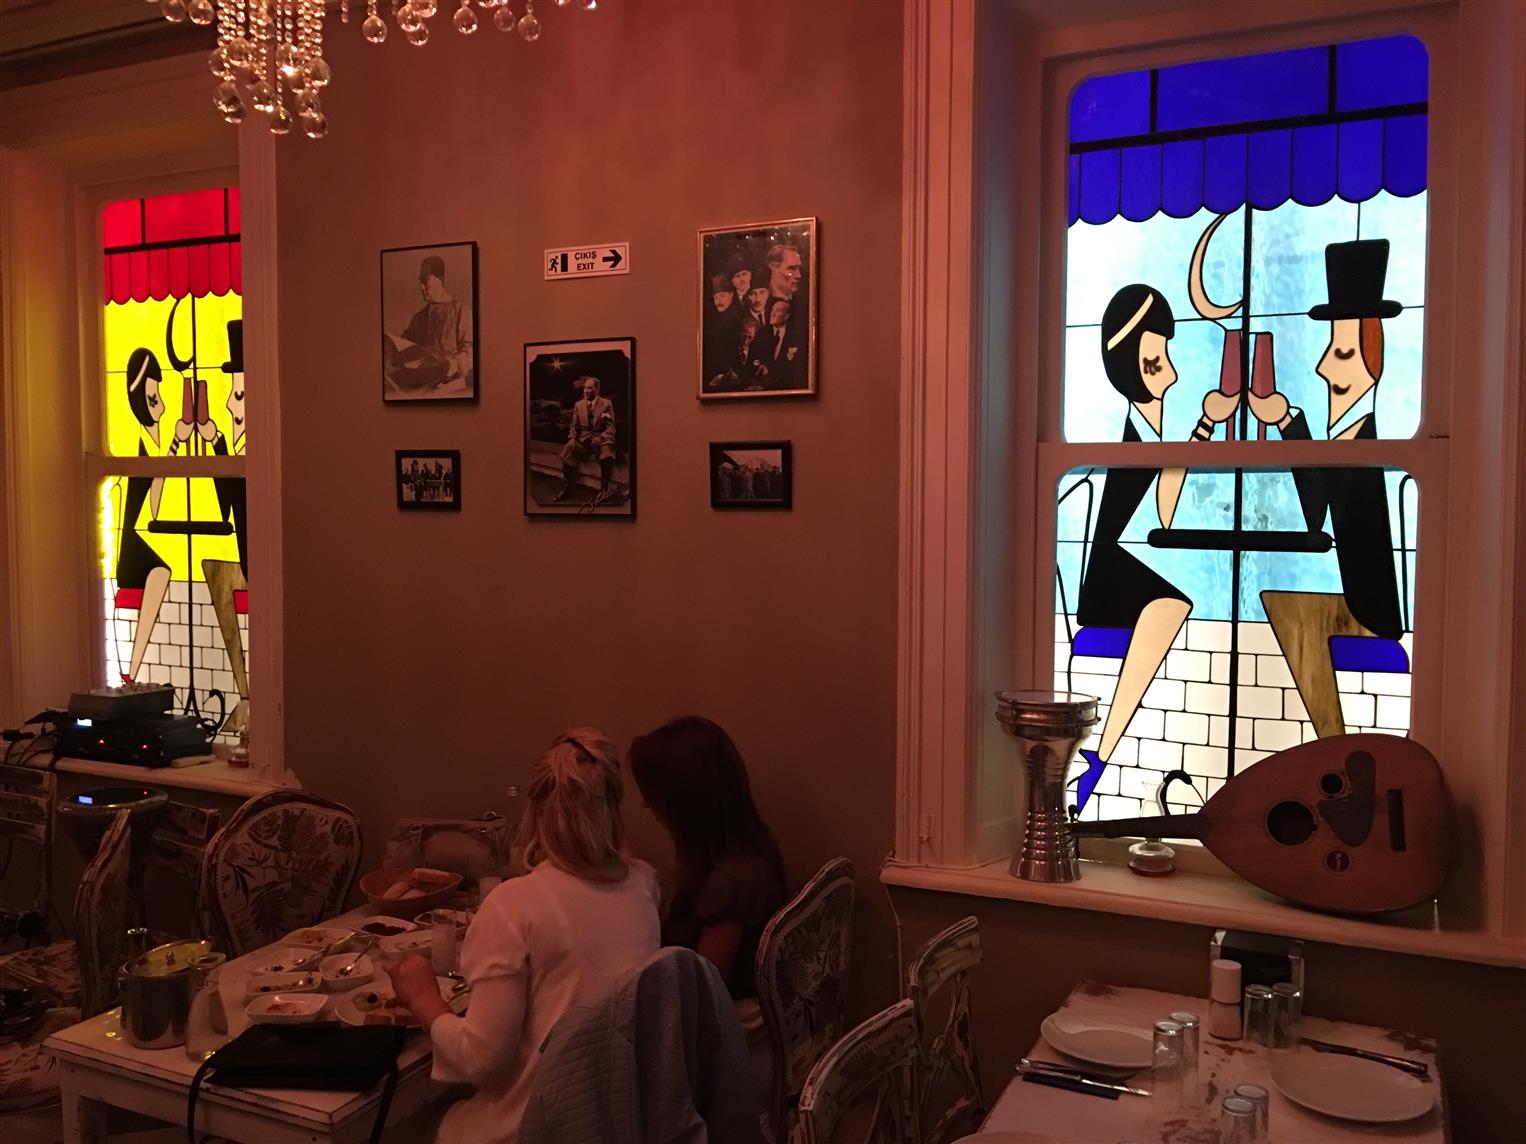 Maitia Restoran Güzelyalı Ege vitray izmir